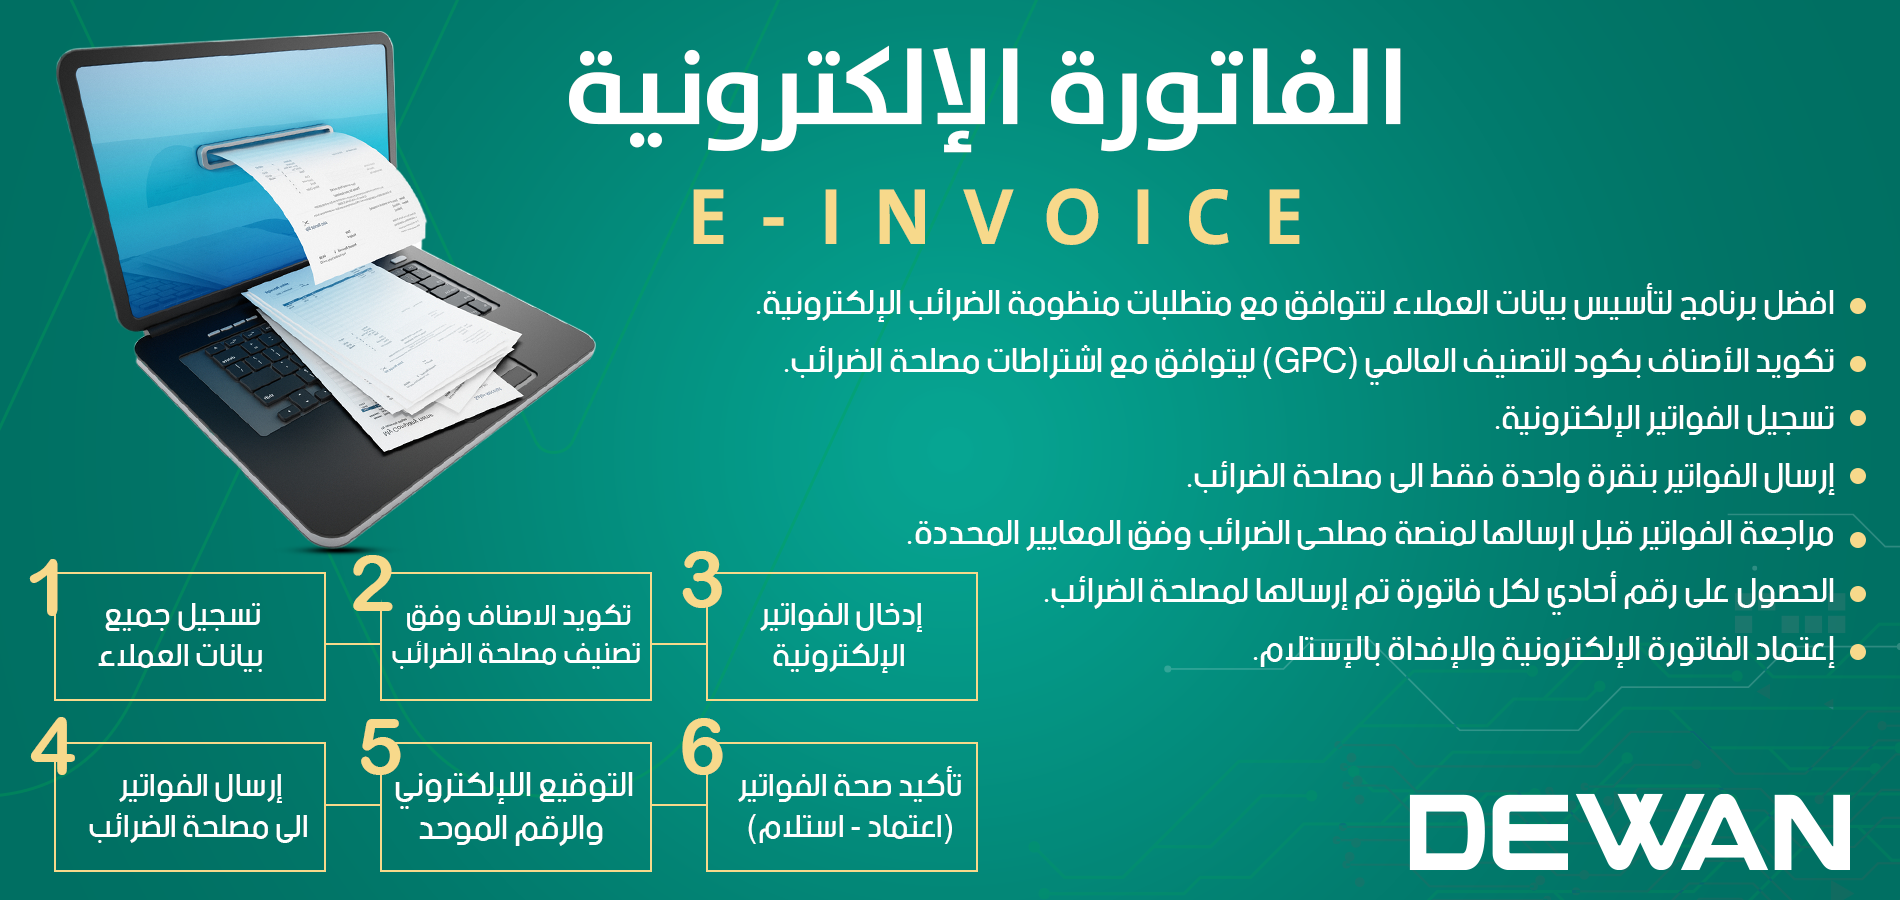 Electronic Invoice